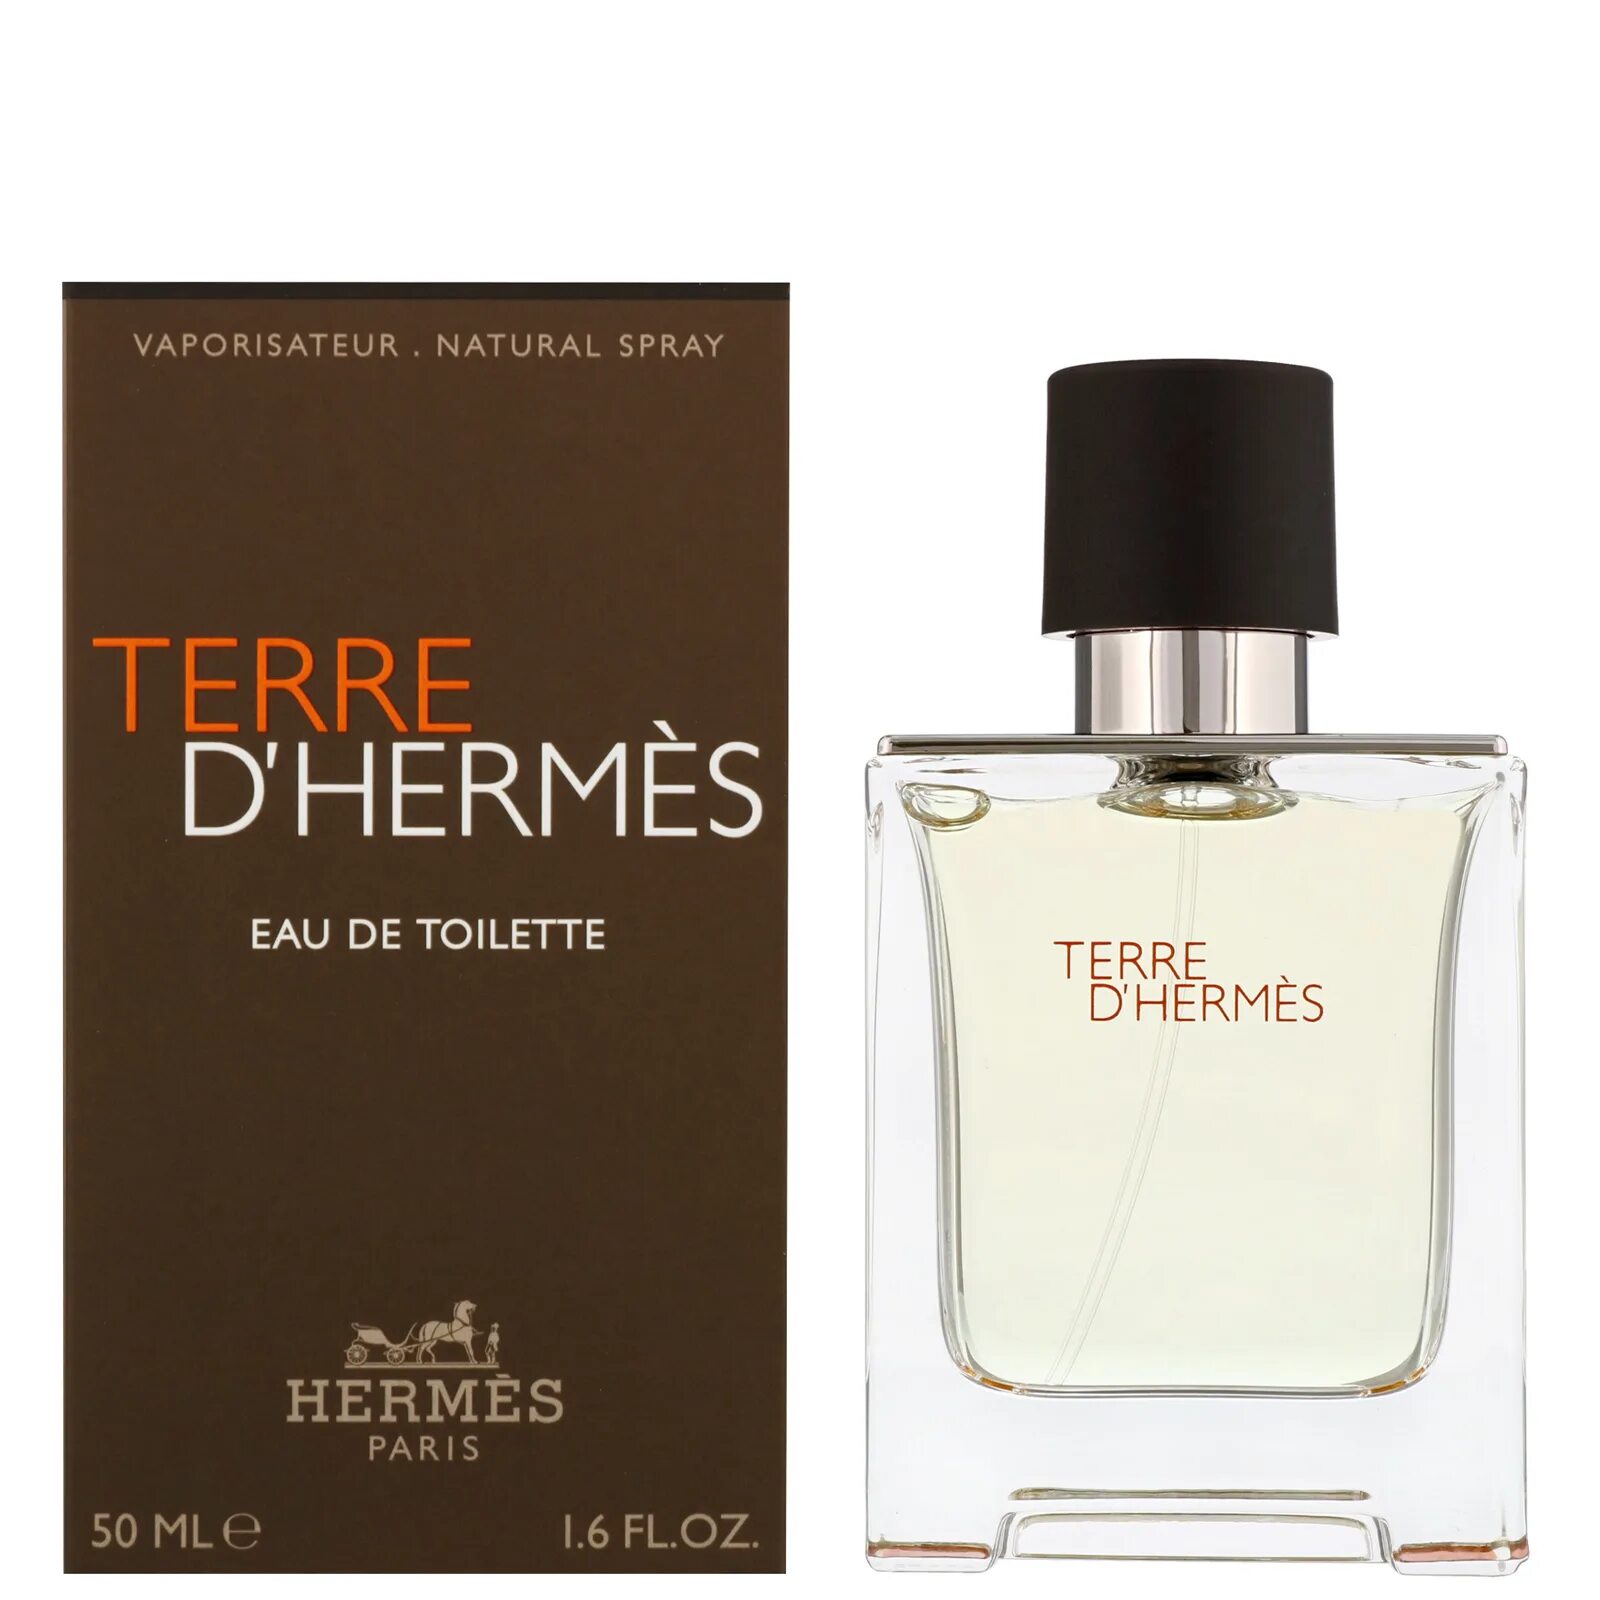 Вода hermes terre d hermes. Hermes Terre d'Hermes 50 мл. Terre d'Hermes 50ml Tester. Hermes Terre d'Hermes 50ml EDT. Hermes Terre d'Hermes, 2006.